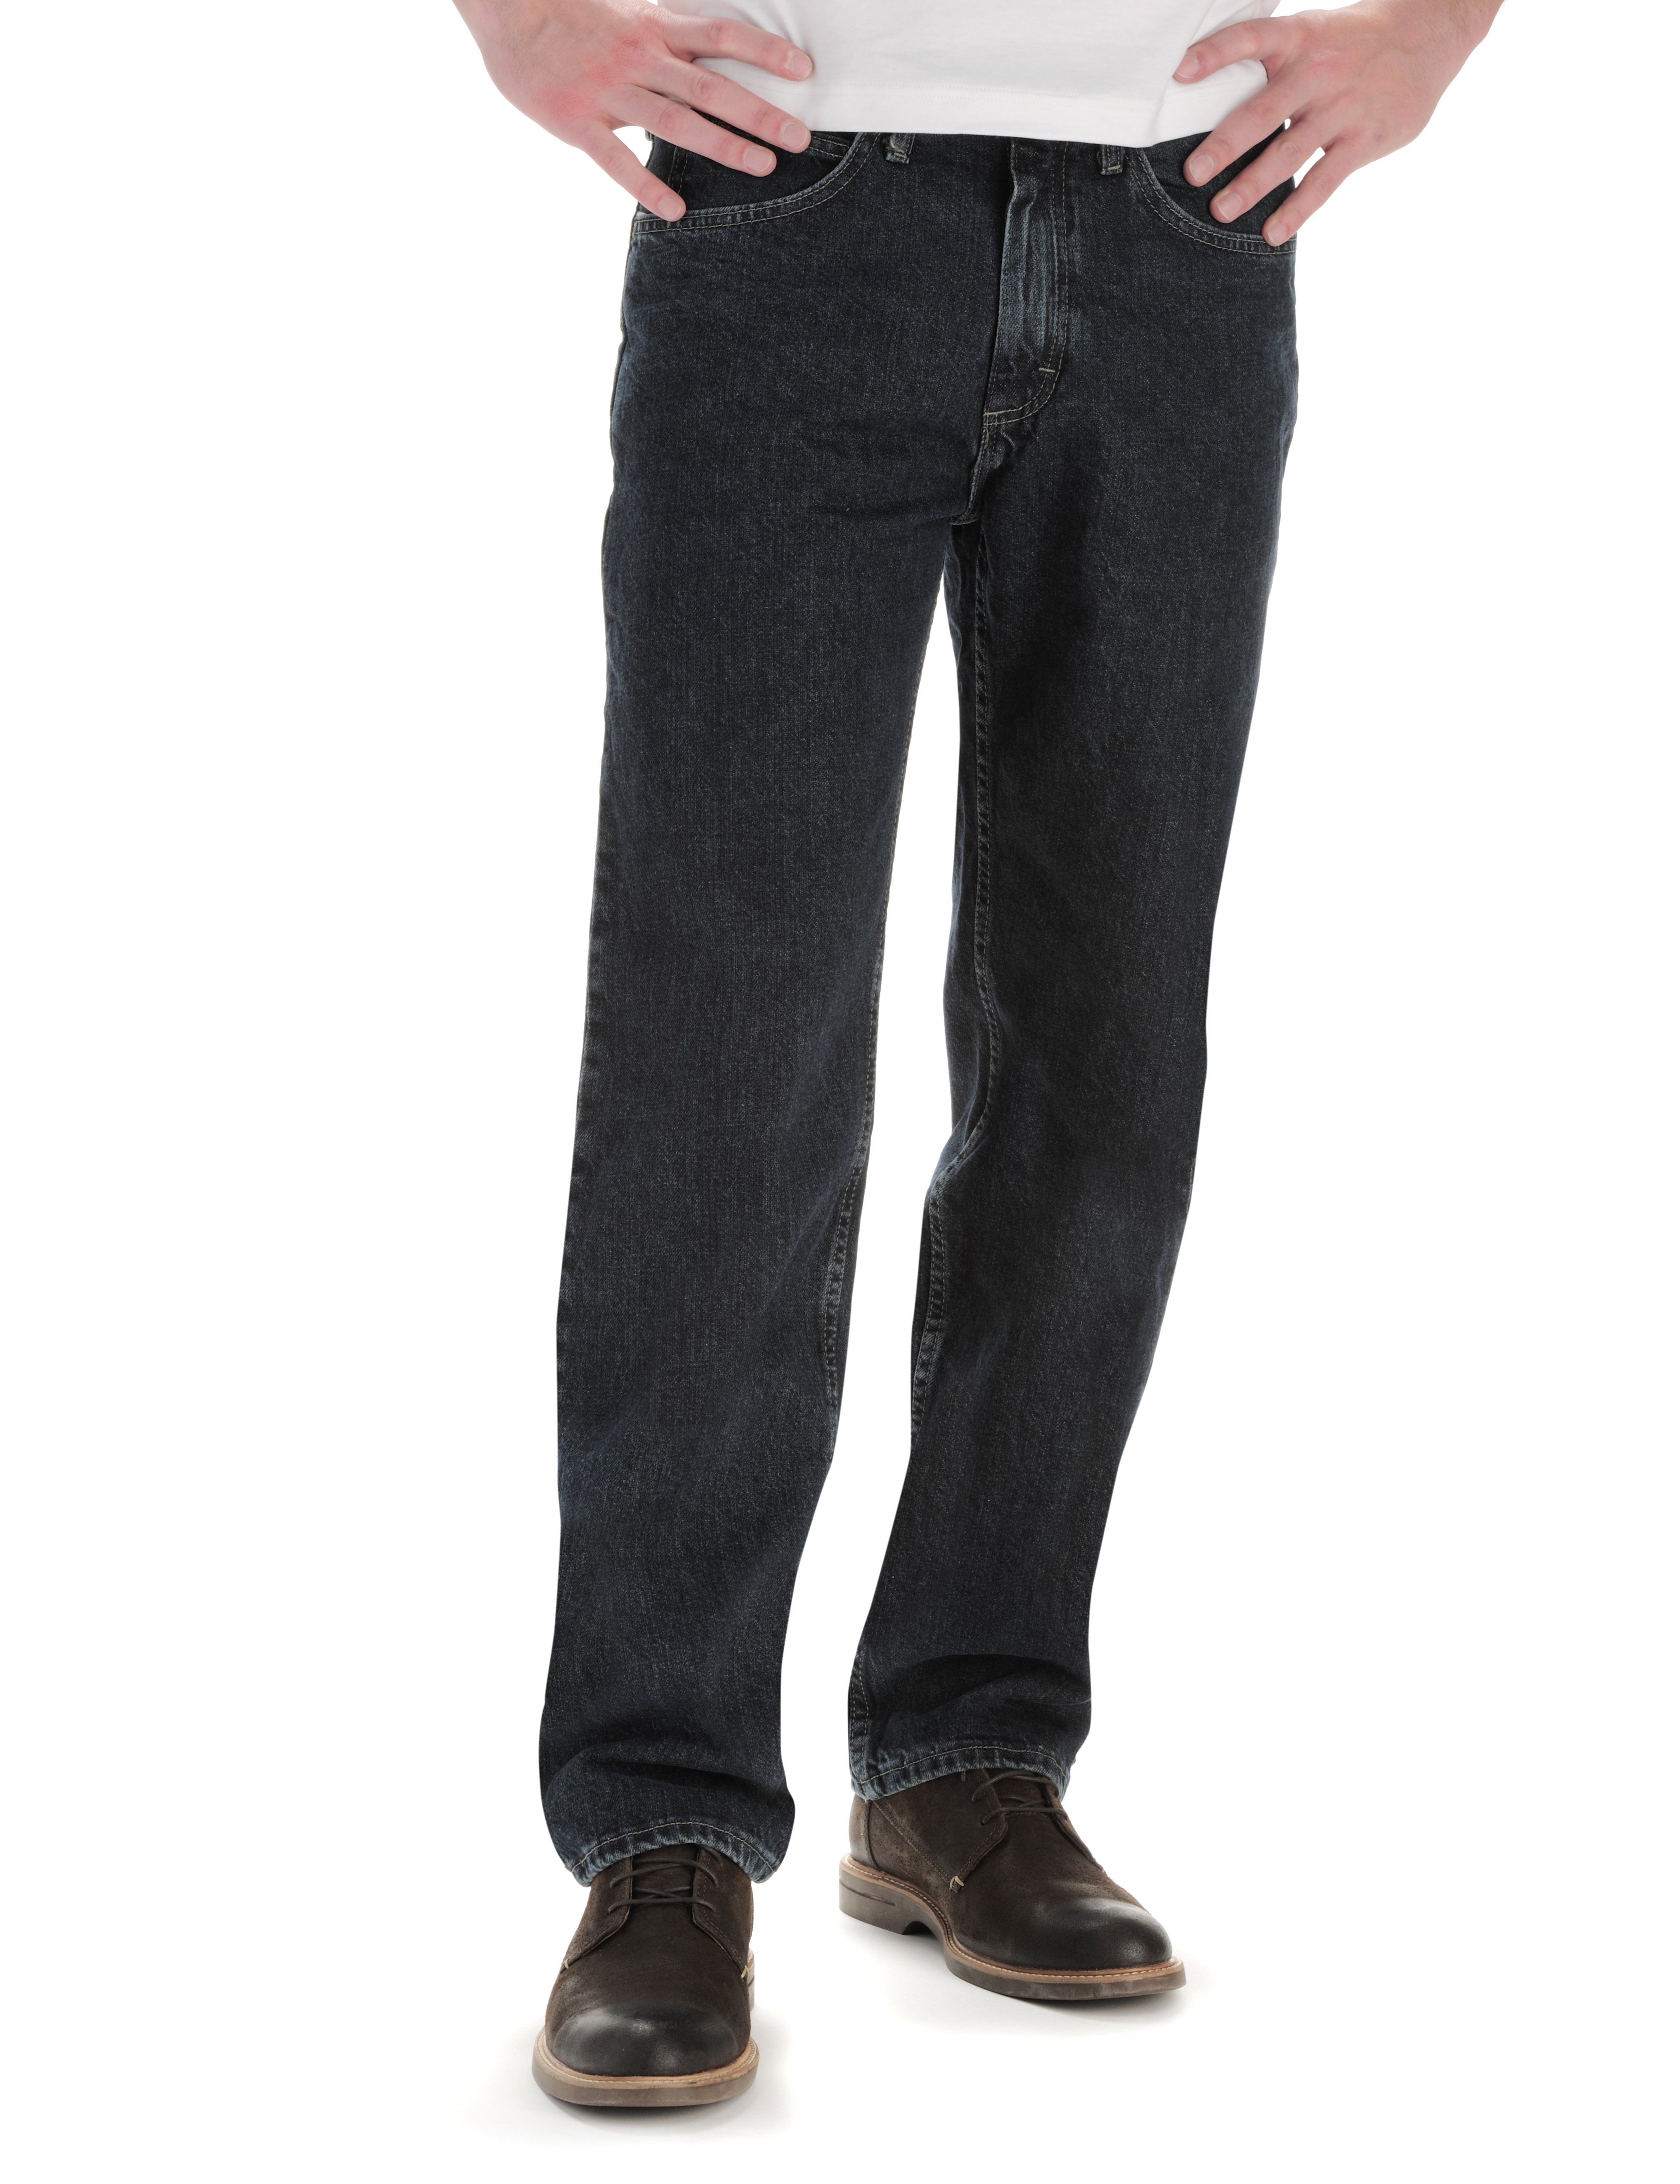 lee comfort waist jeans mens